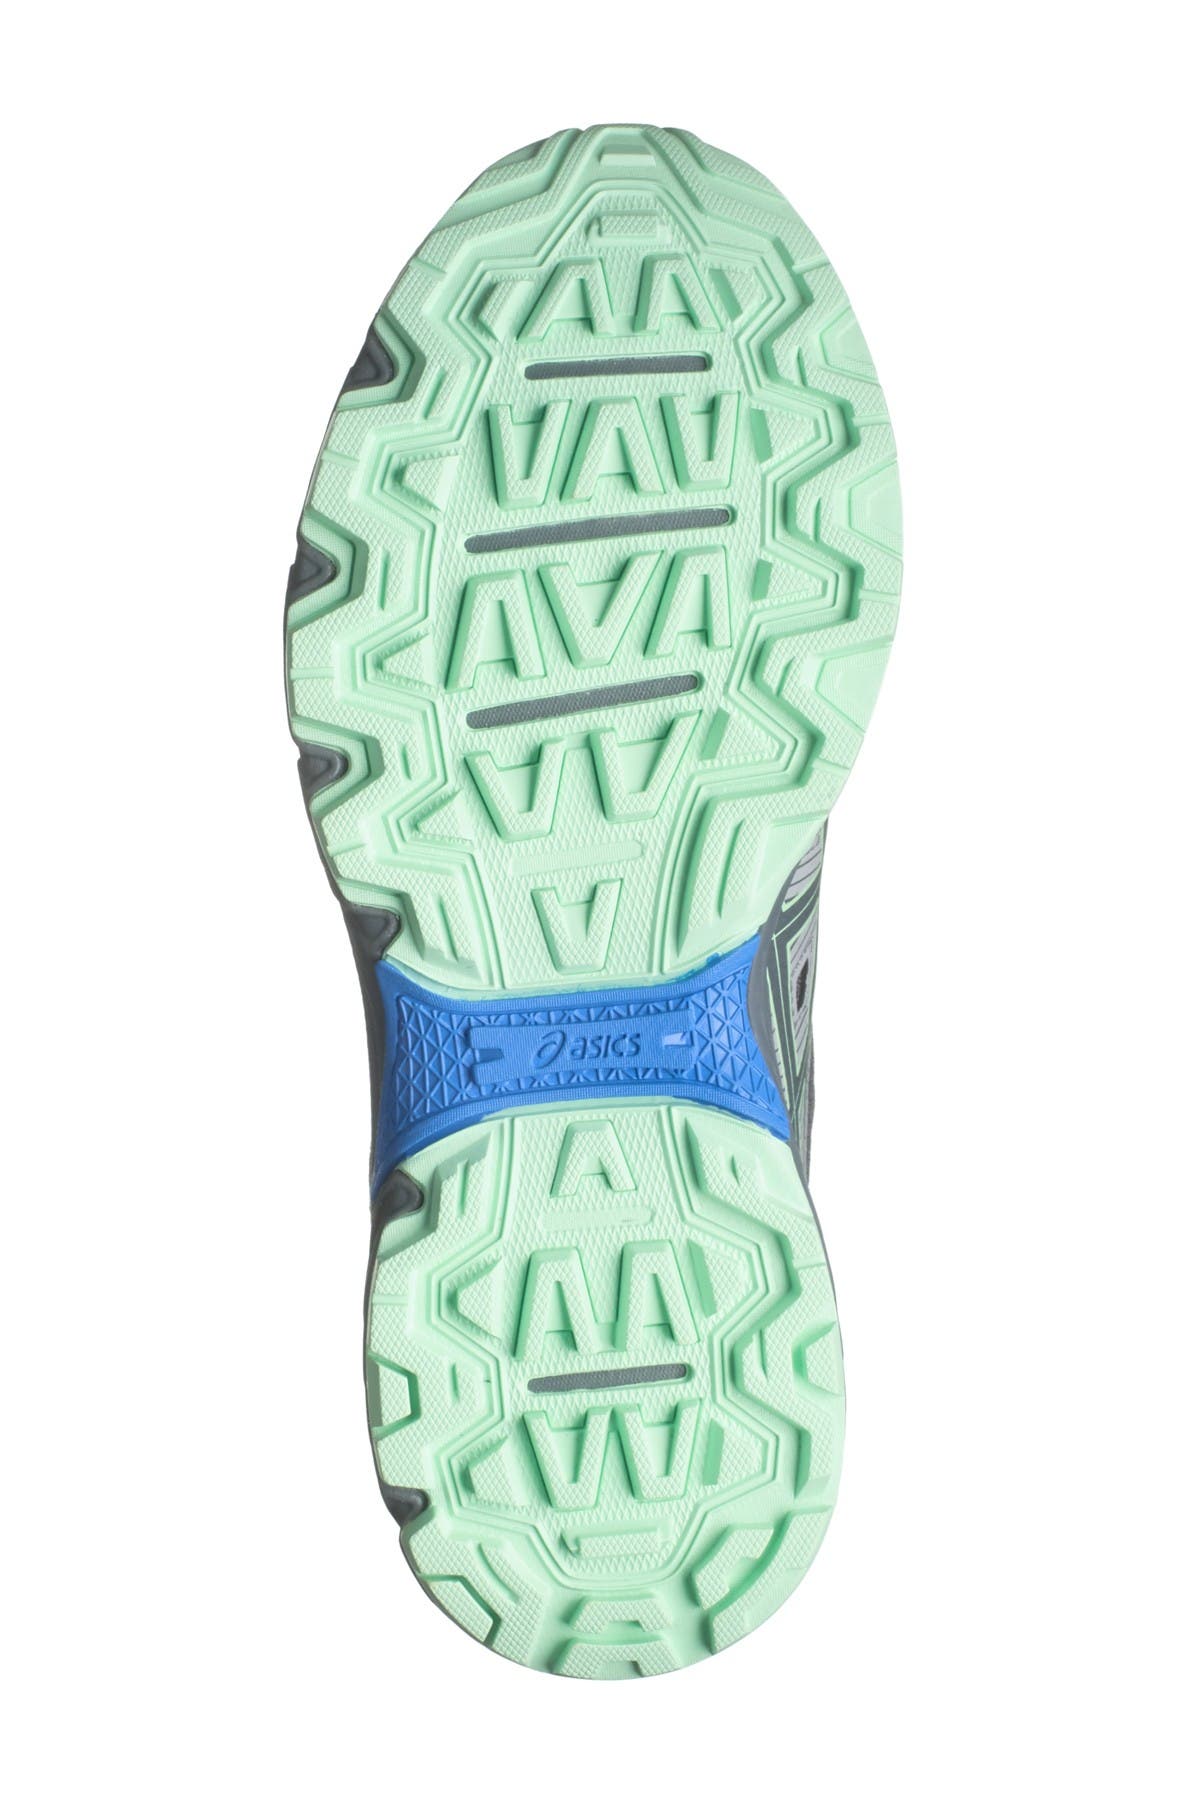 ASICS | GEL-Venture 7 Running Sneaker - Wide Width Available ...